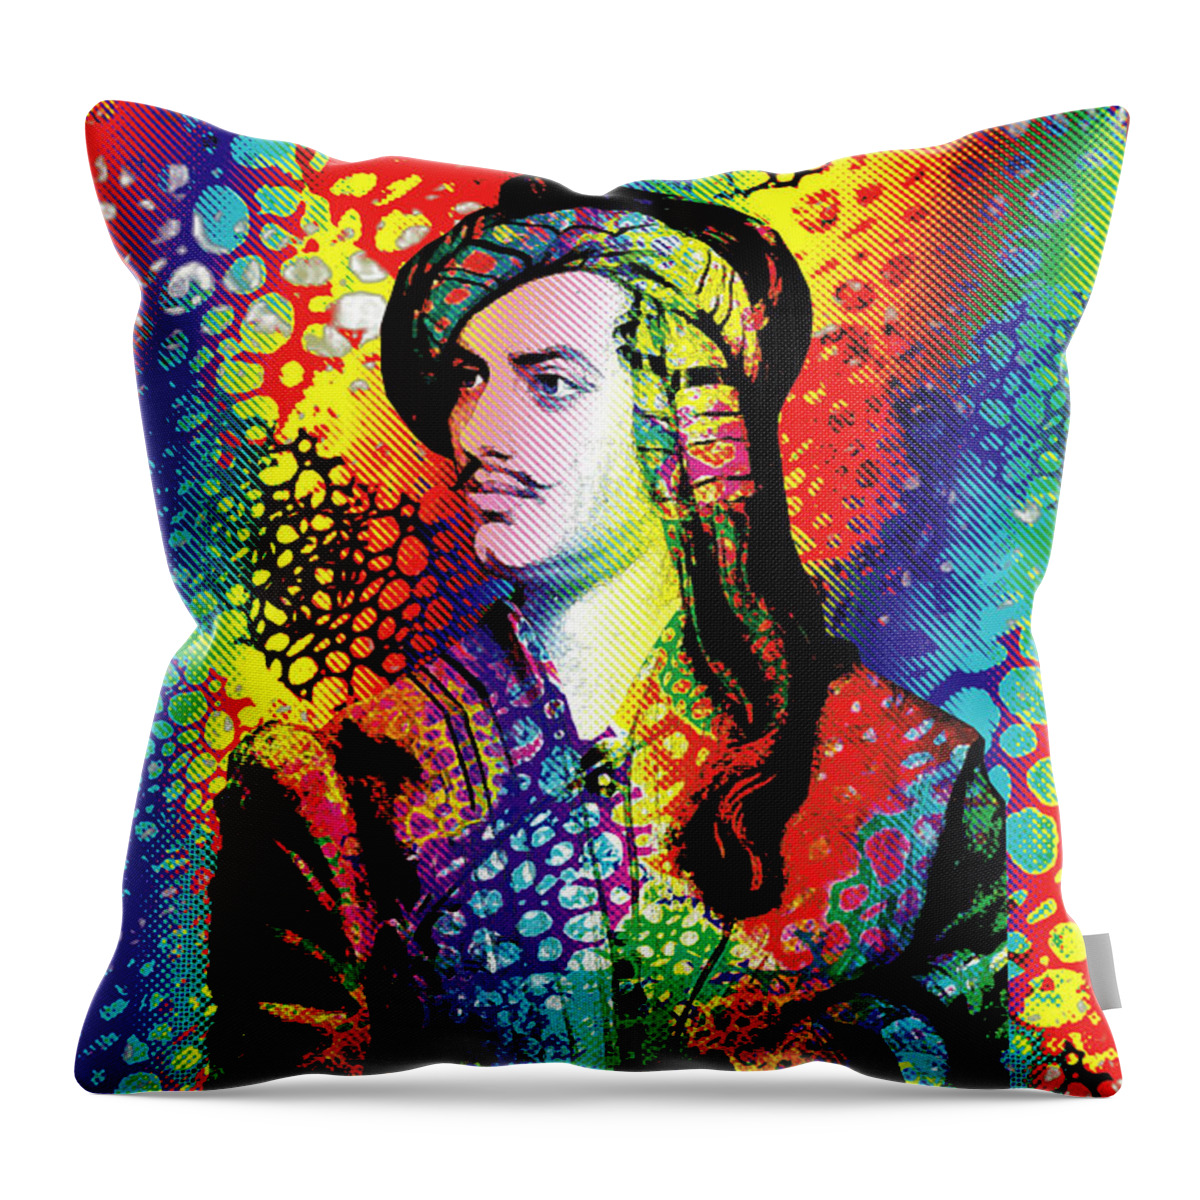 Lord Byron Throw Pillow featuring the digital art Lord Byron by Zoran Maslic